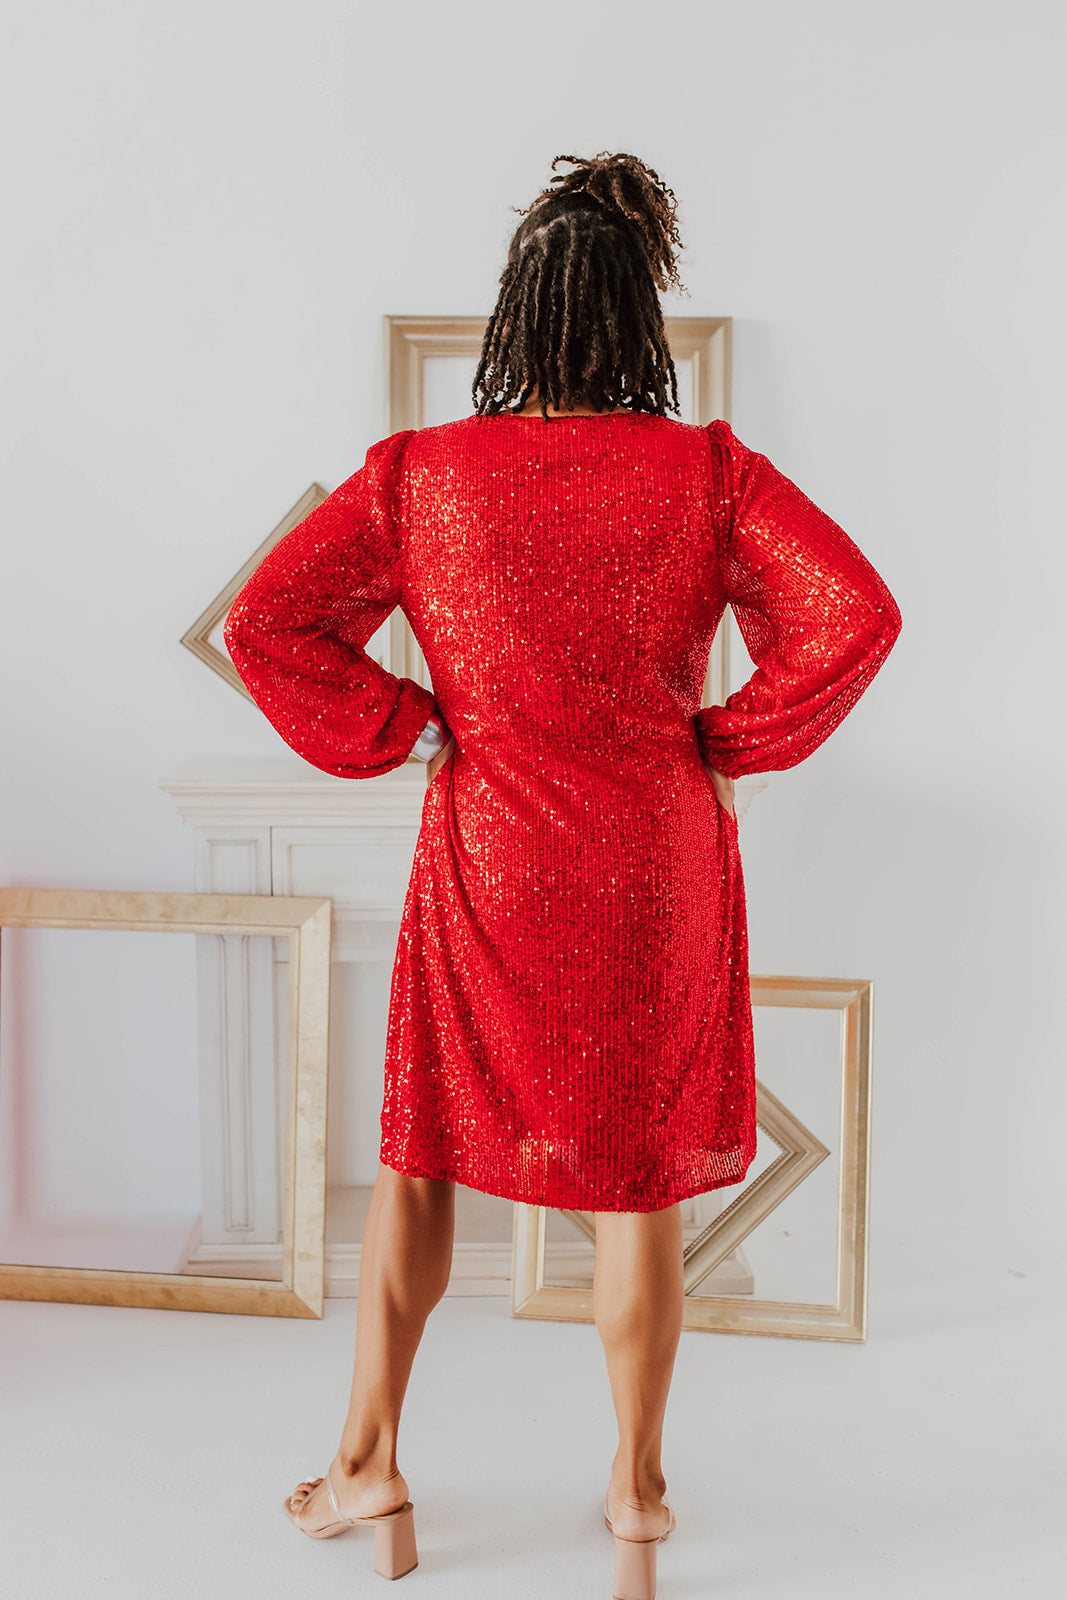 THE RED SEQUIN DRESS BY SARAH TRIPP X PINK DESERT